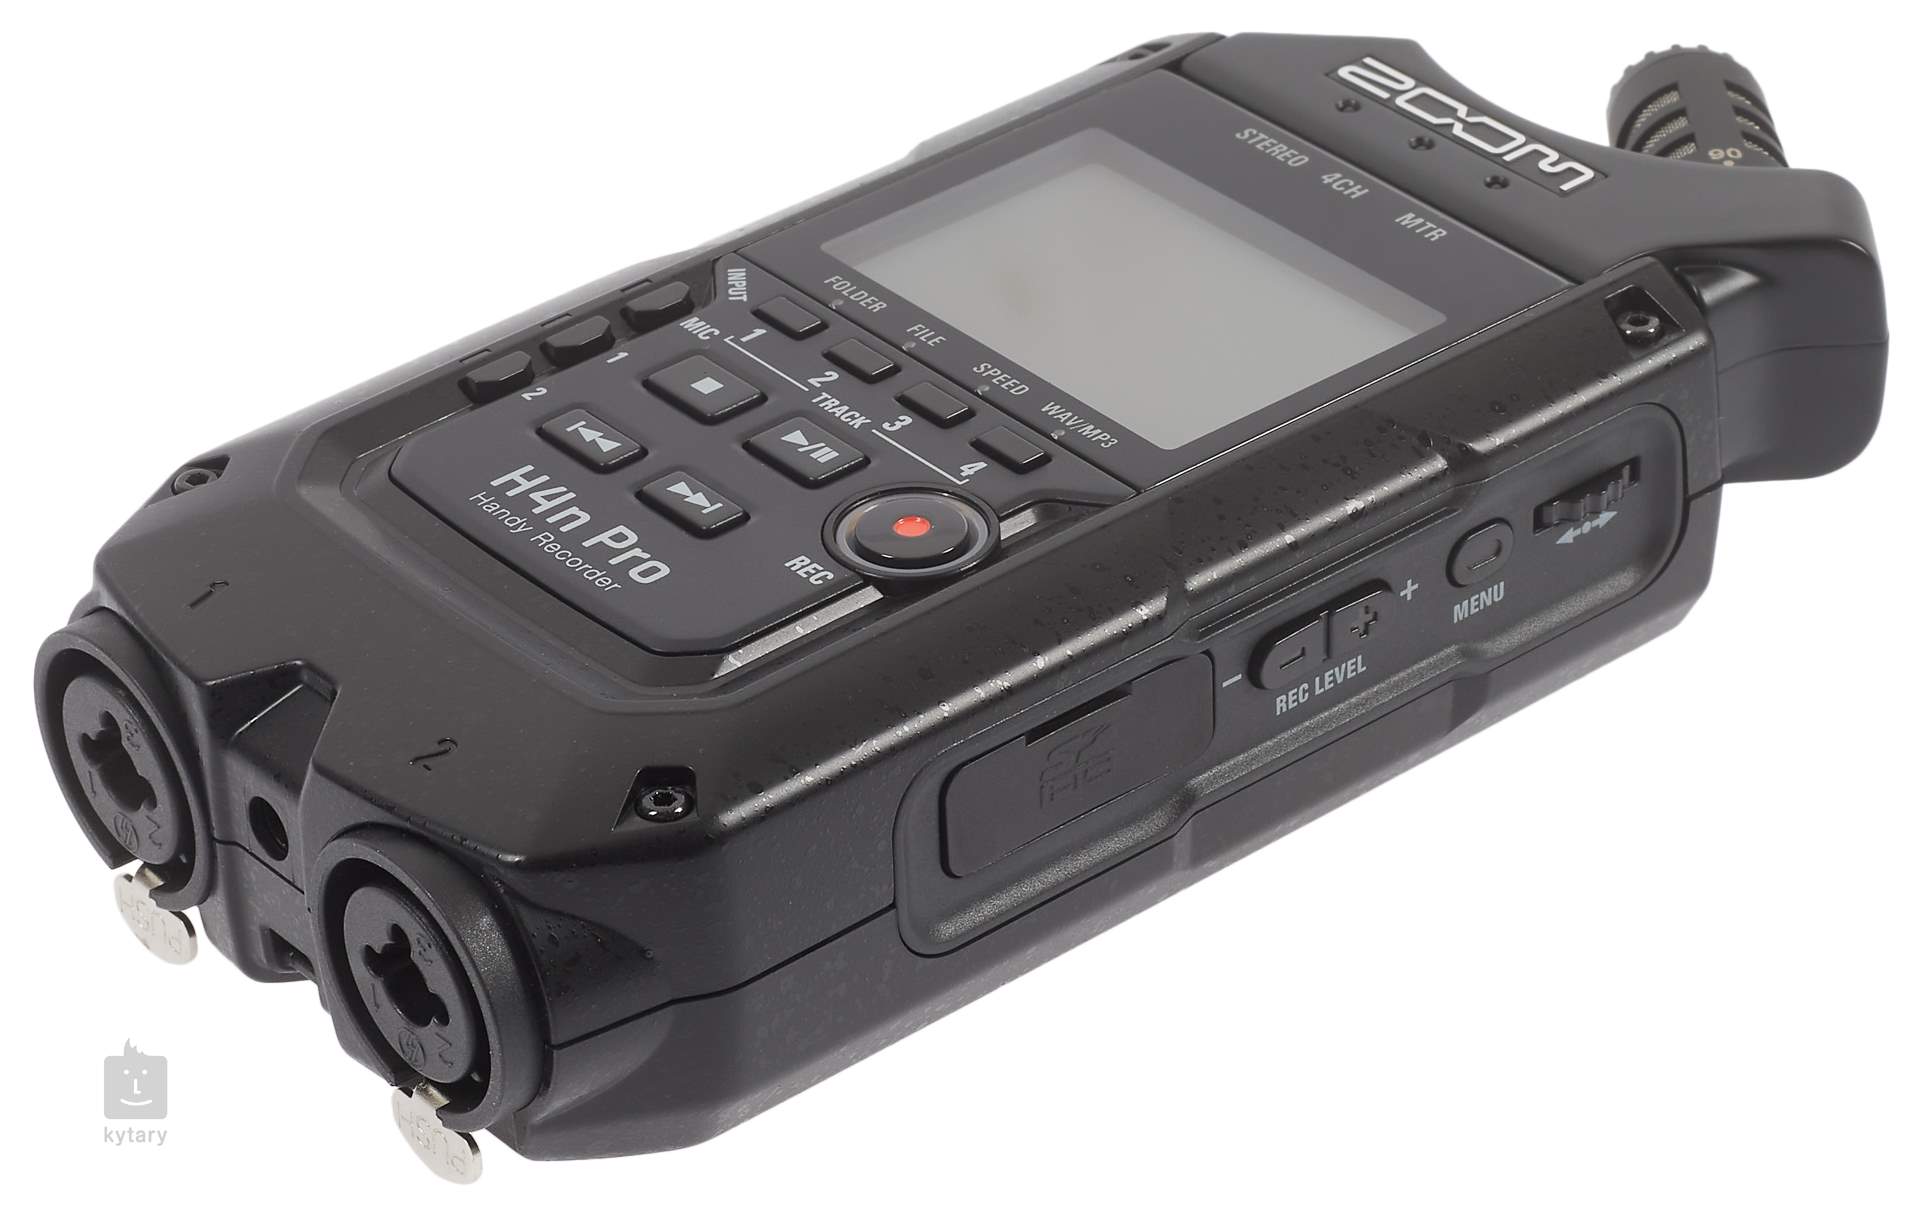 Zoom H4n Pro Portable Handy Recorder